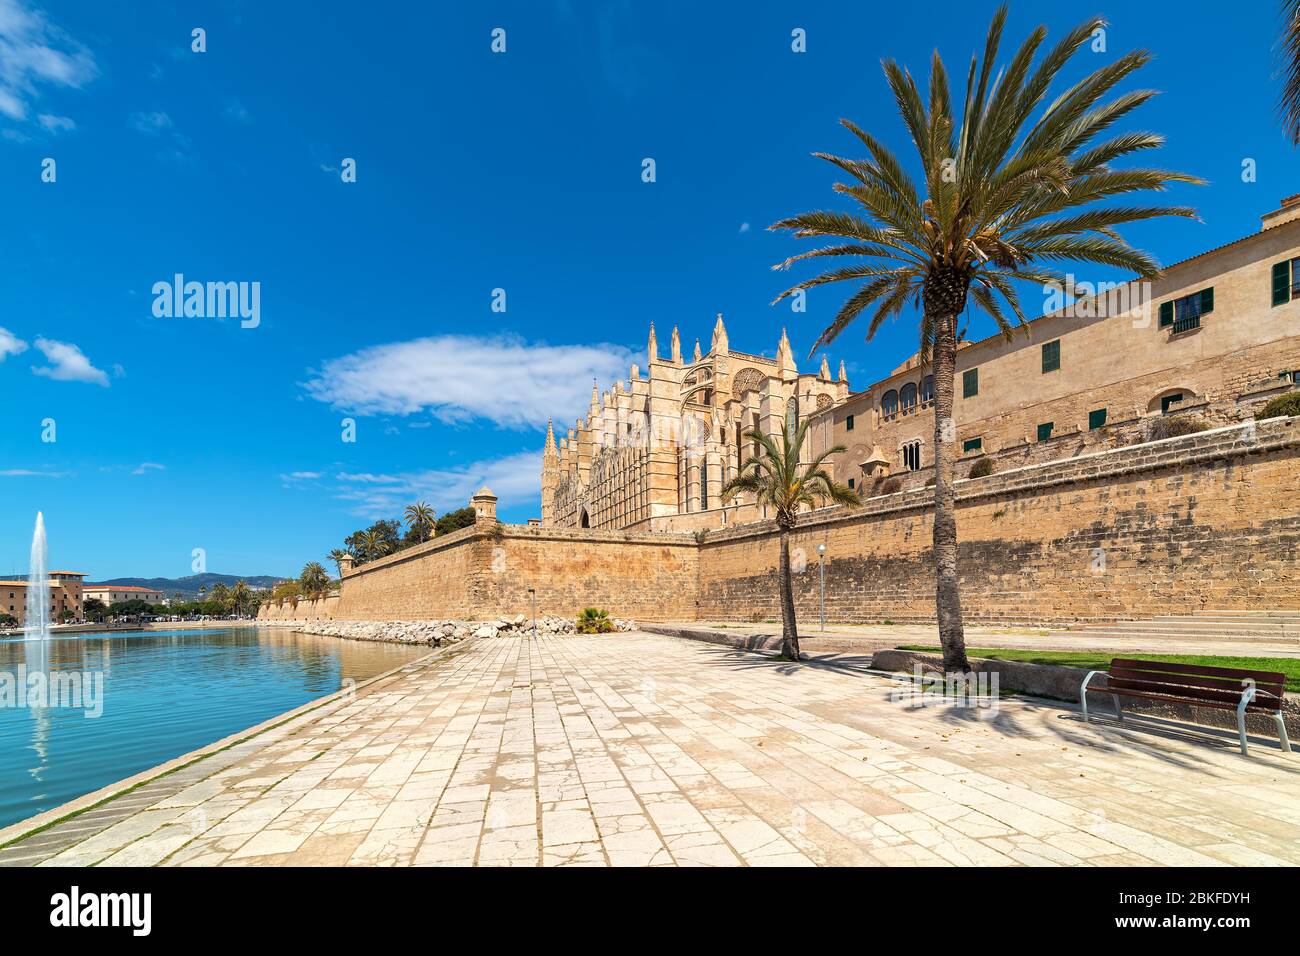 Cathedral of Santa Maria under blues sky as seen from Parc de la Mar in Palma de Mallorca, Spain. Stock Photo